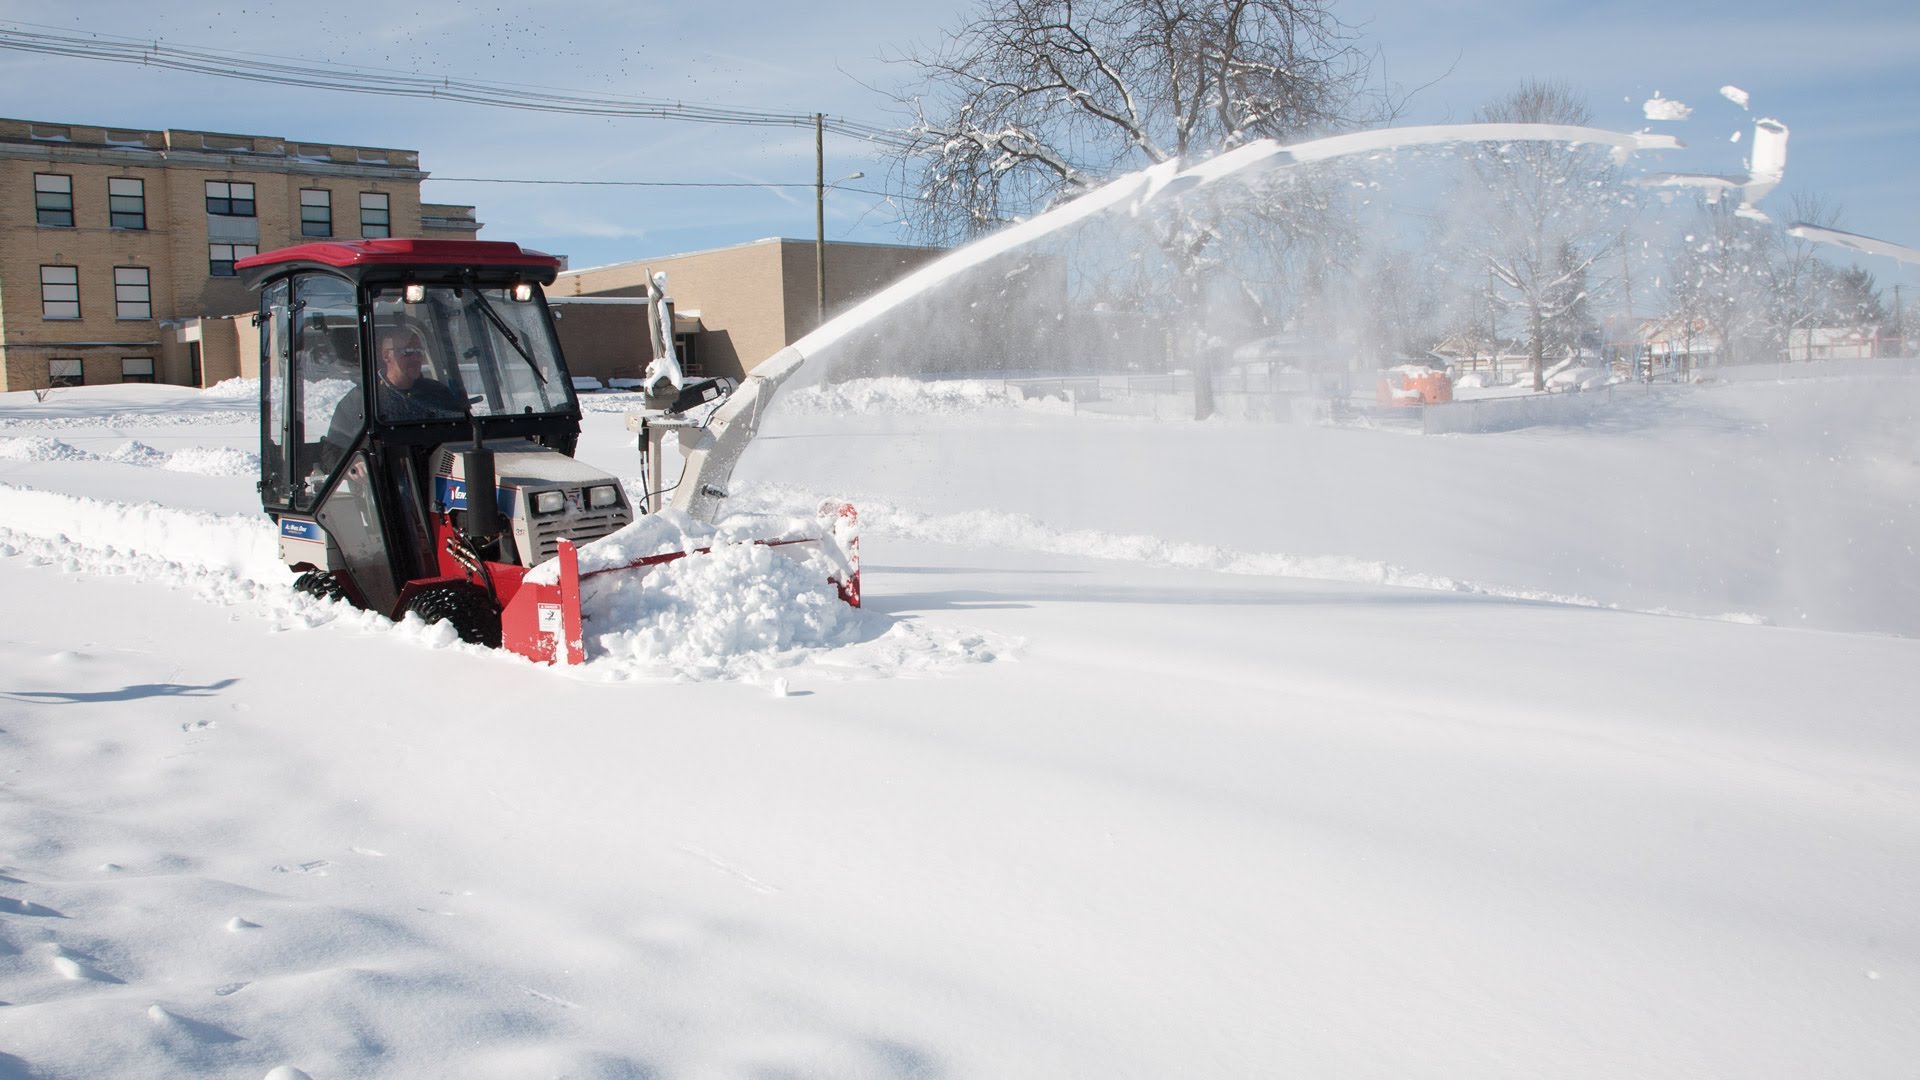 World's Best Snow Removal Machine for Sidewalks - YouTube